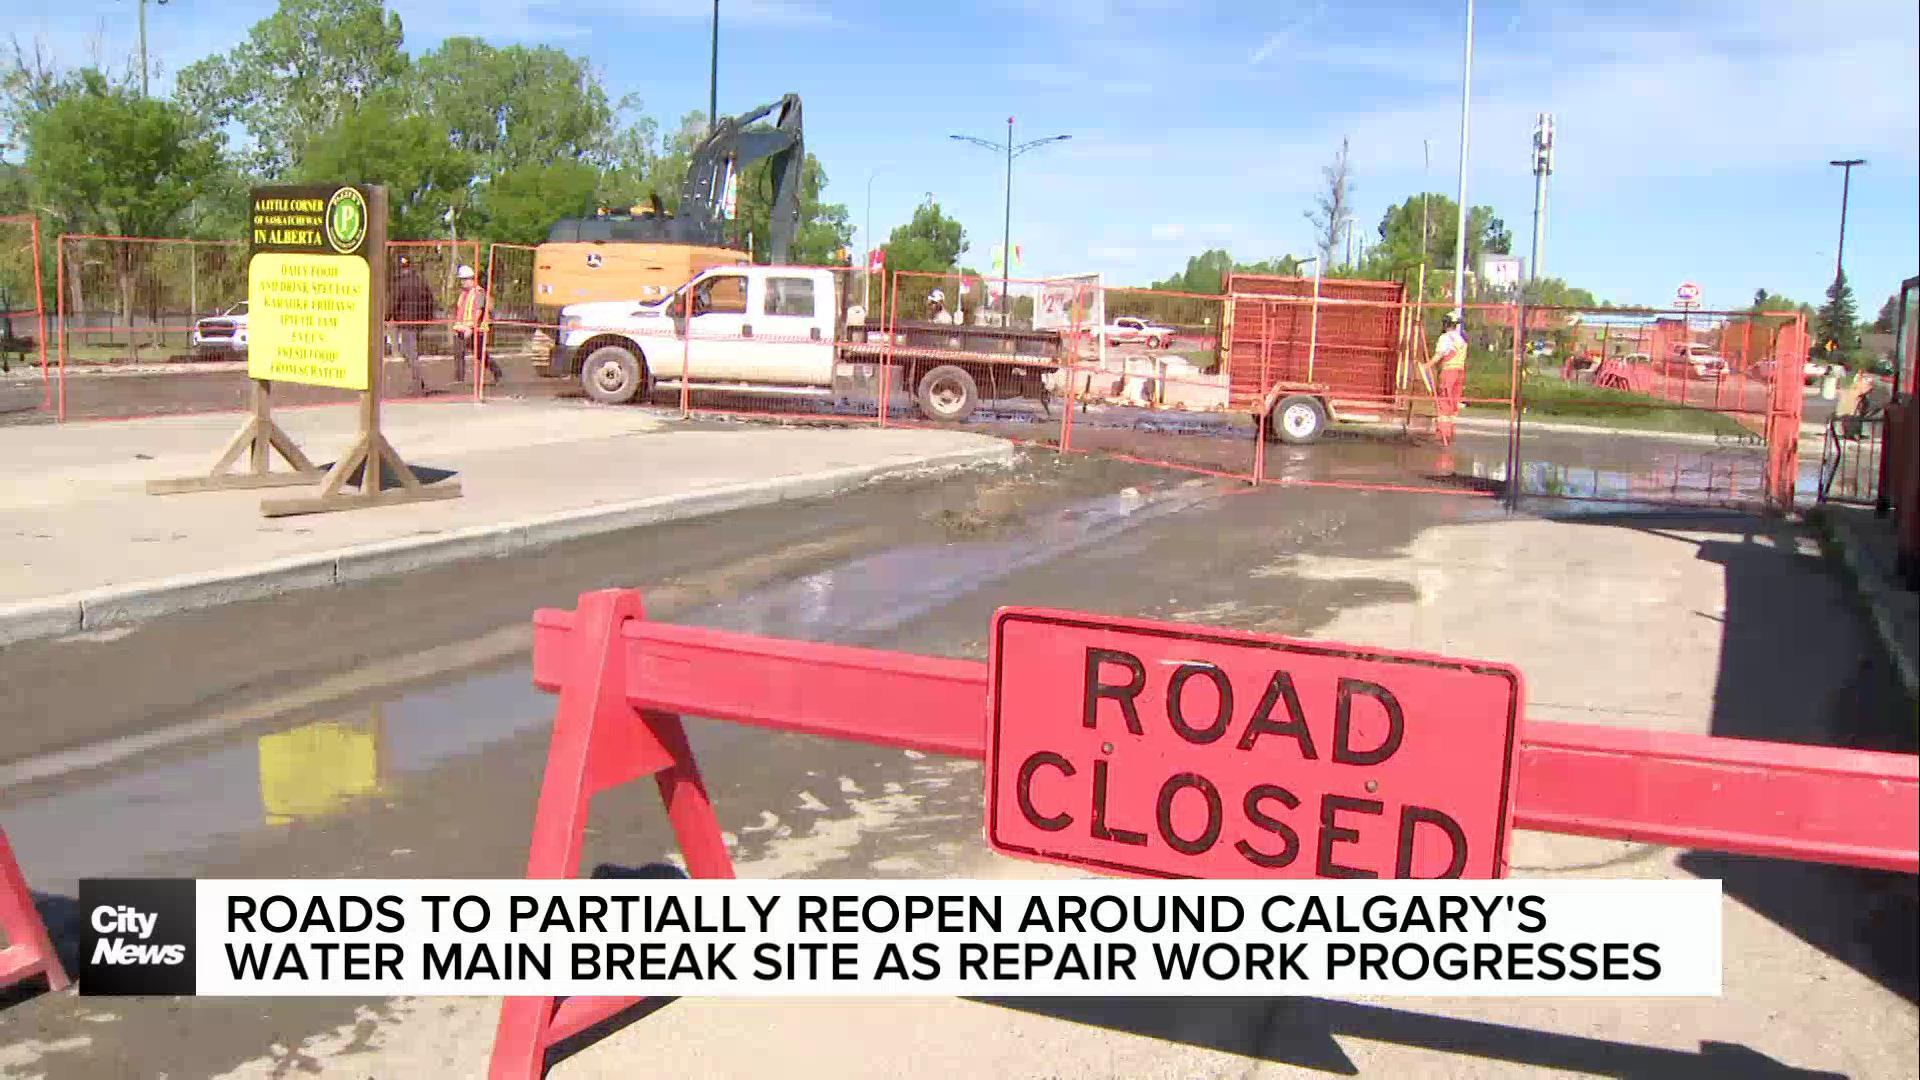 Roads to partially reopen around Calgary’s water main break as repair work progresses